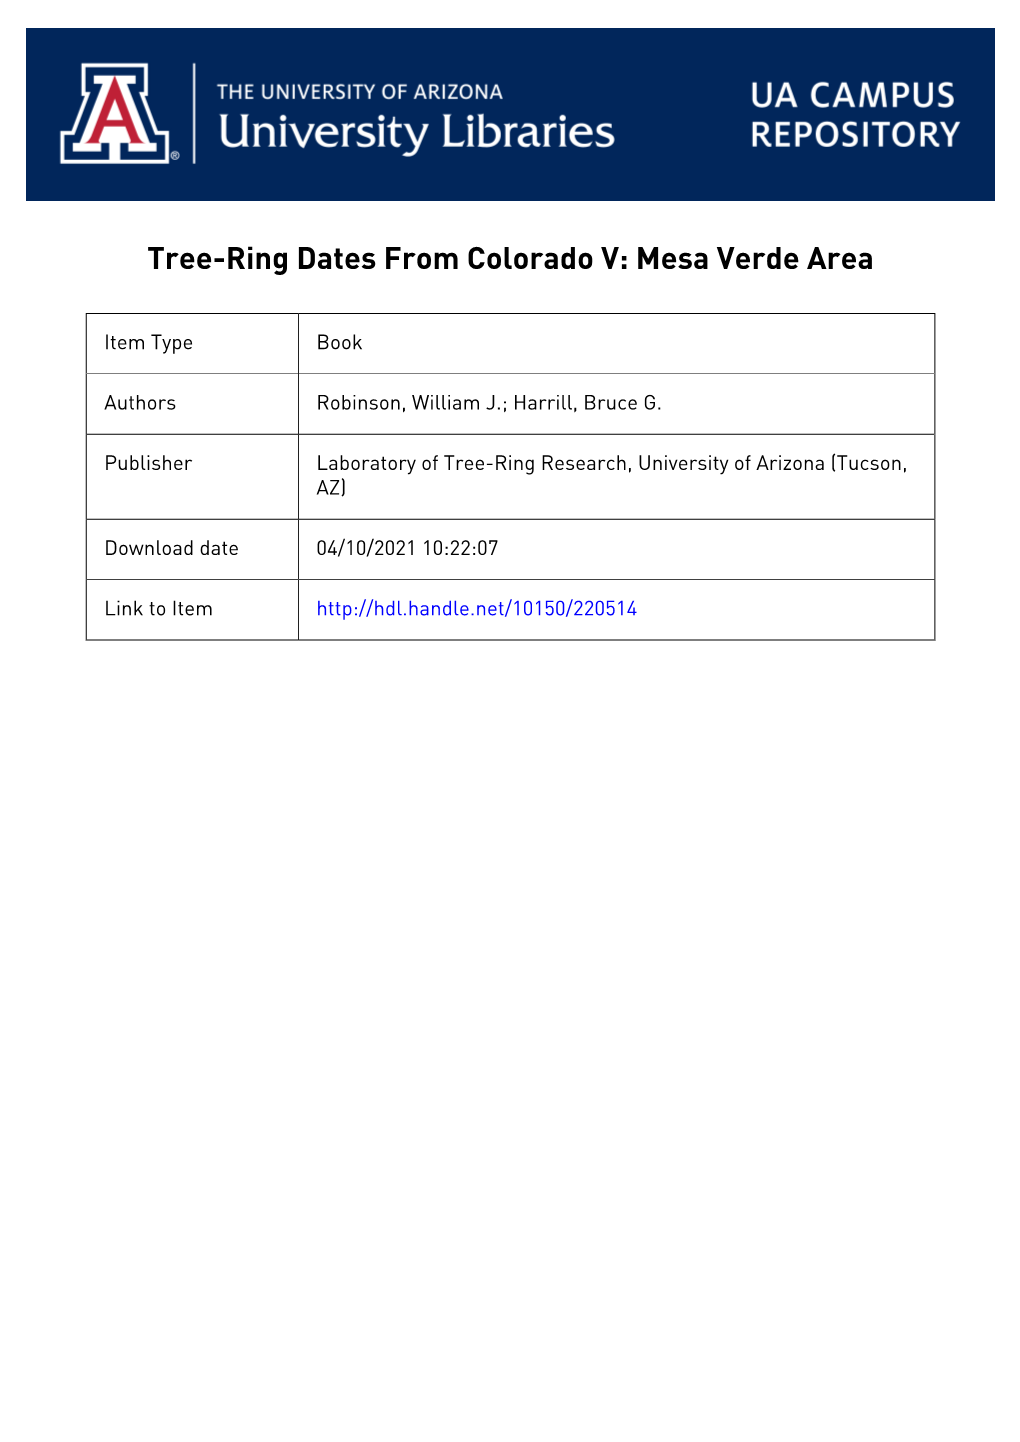 Tree-Ring Dates from Colorado V: Mesa Verde Area